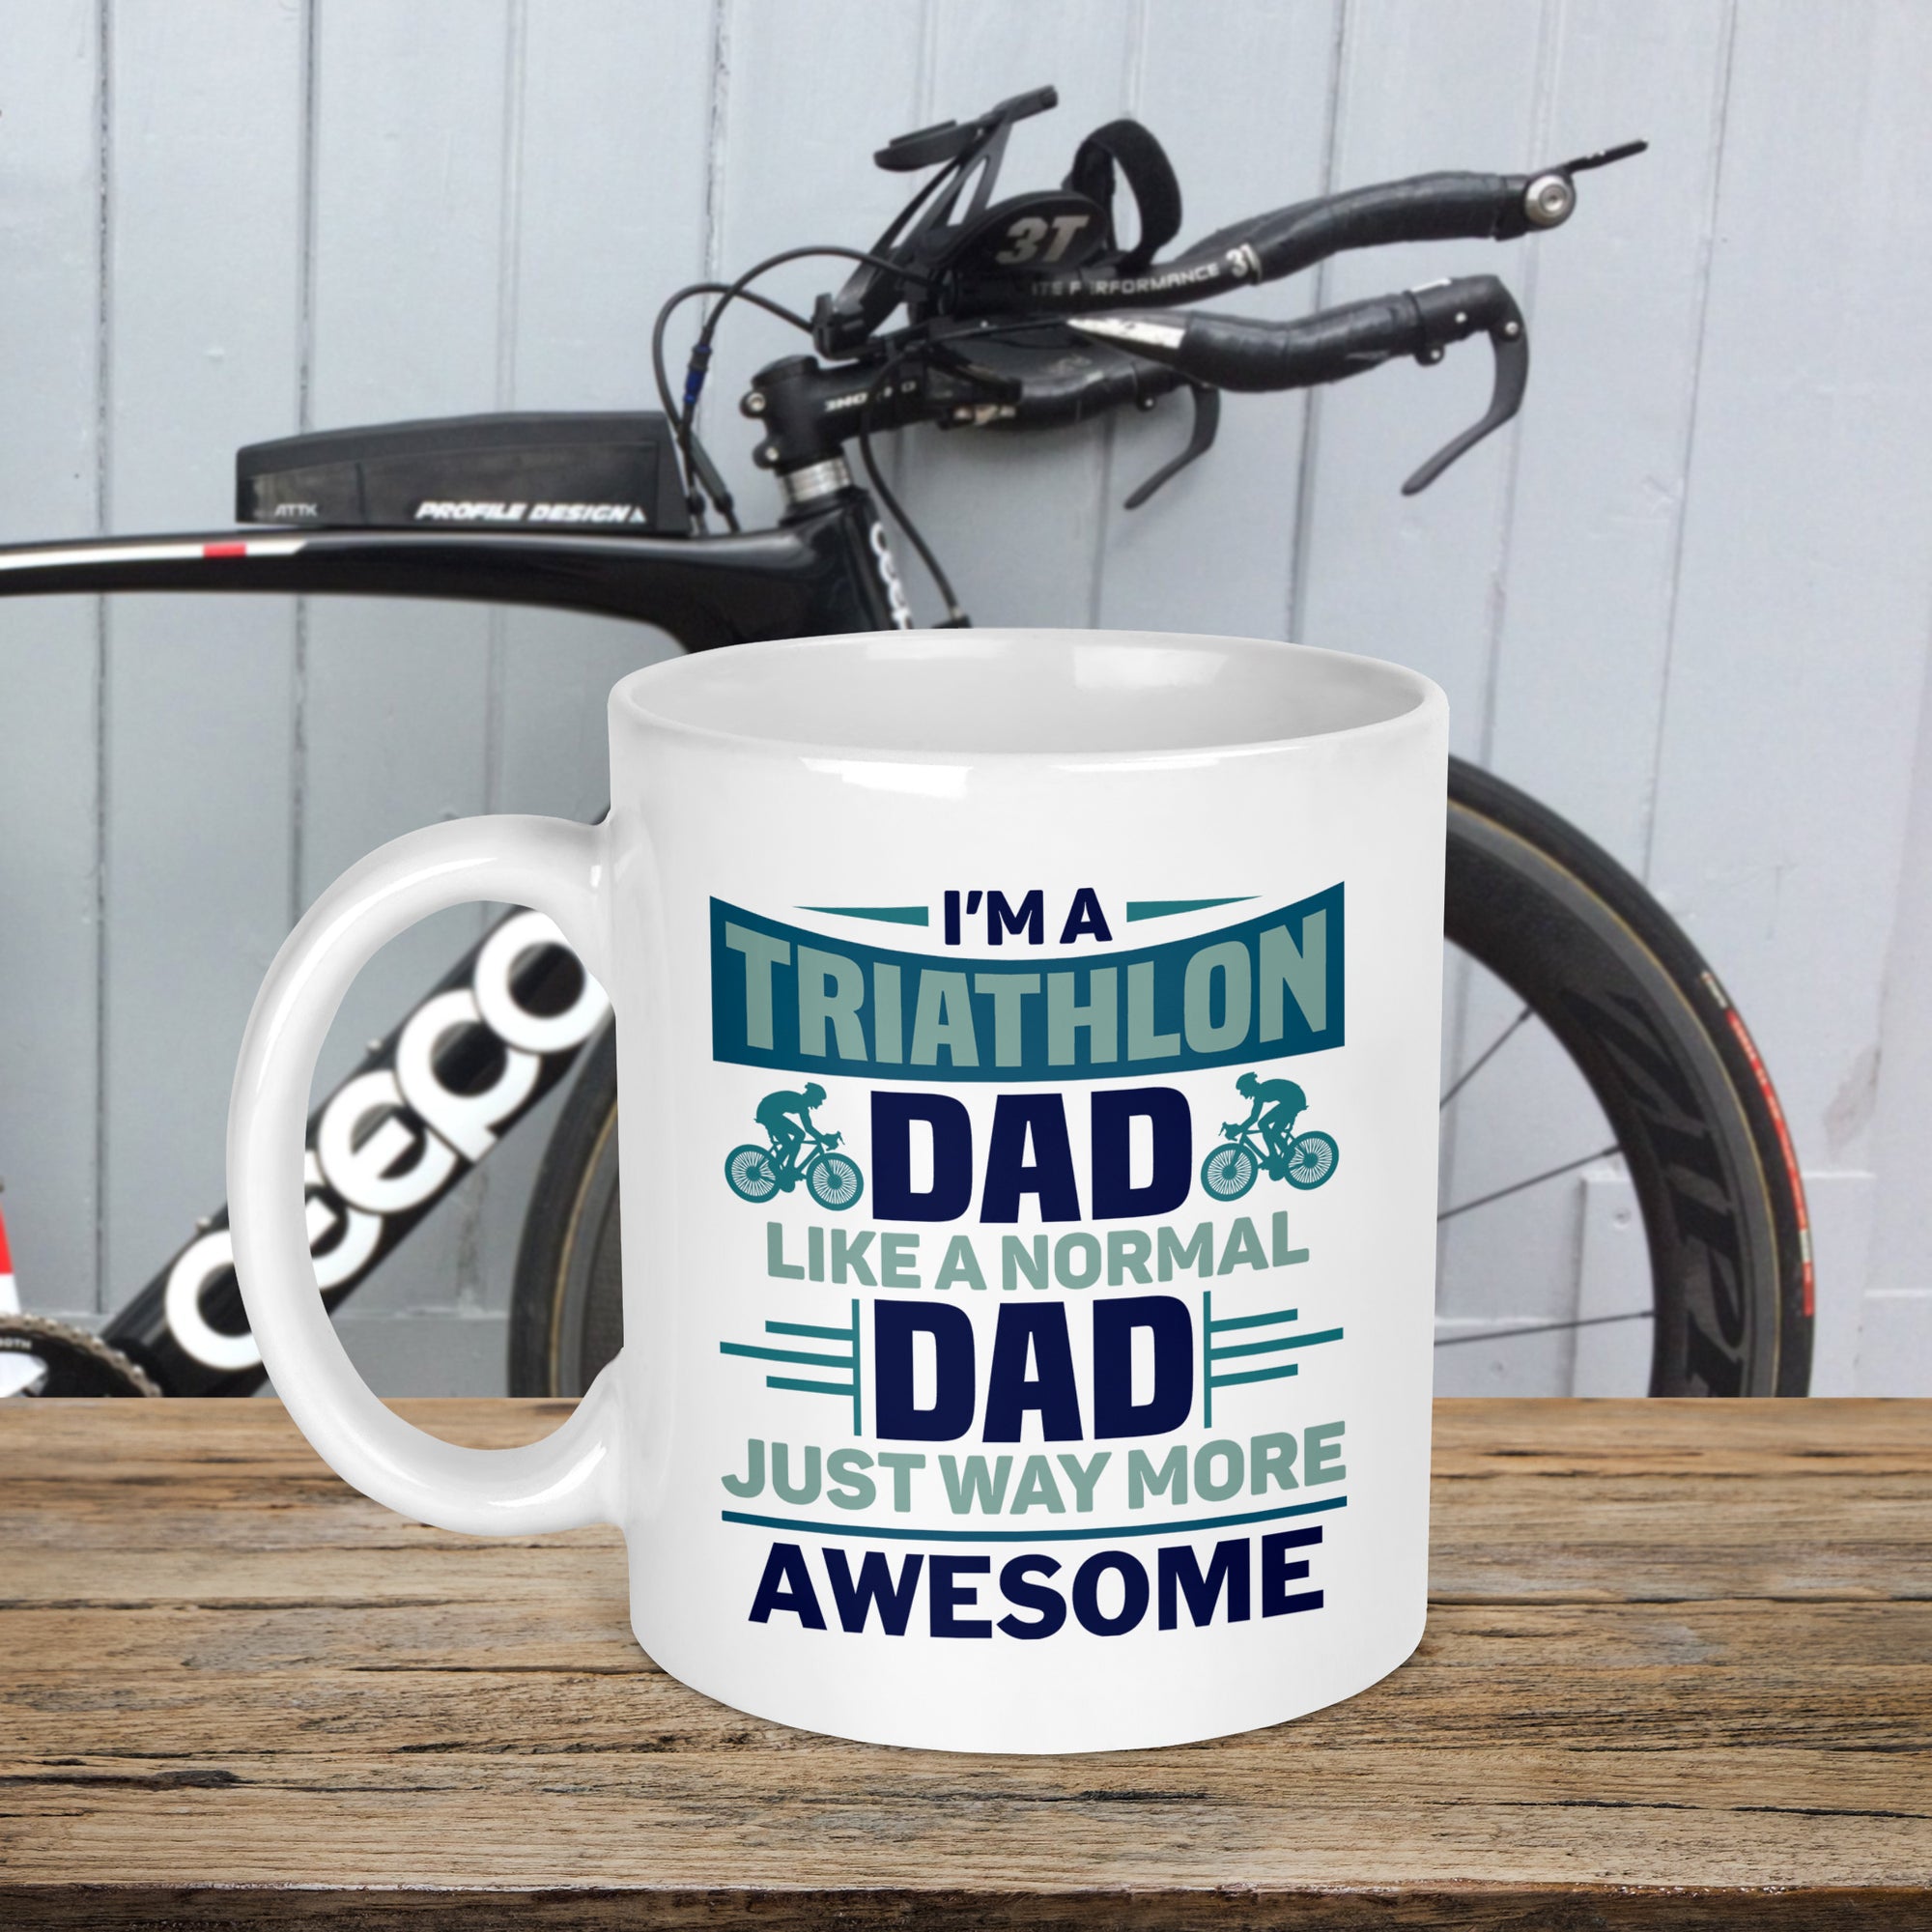 I'm A Triathlon Dad Like A Normal Dad Just Way More Awesome Mug